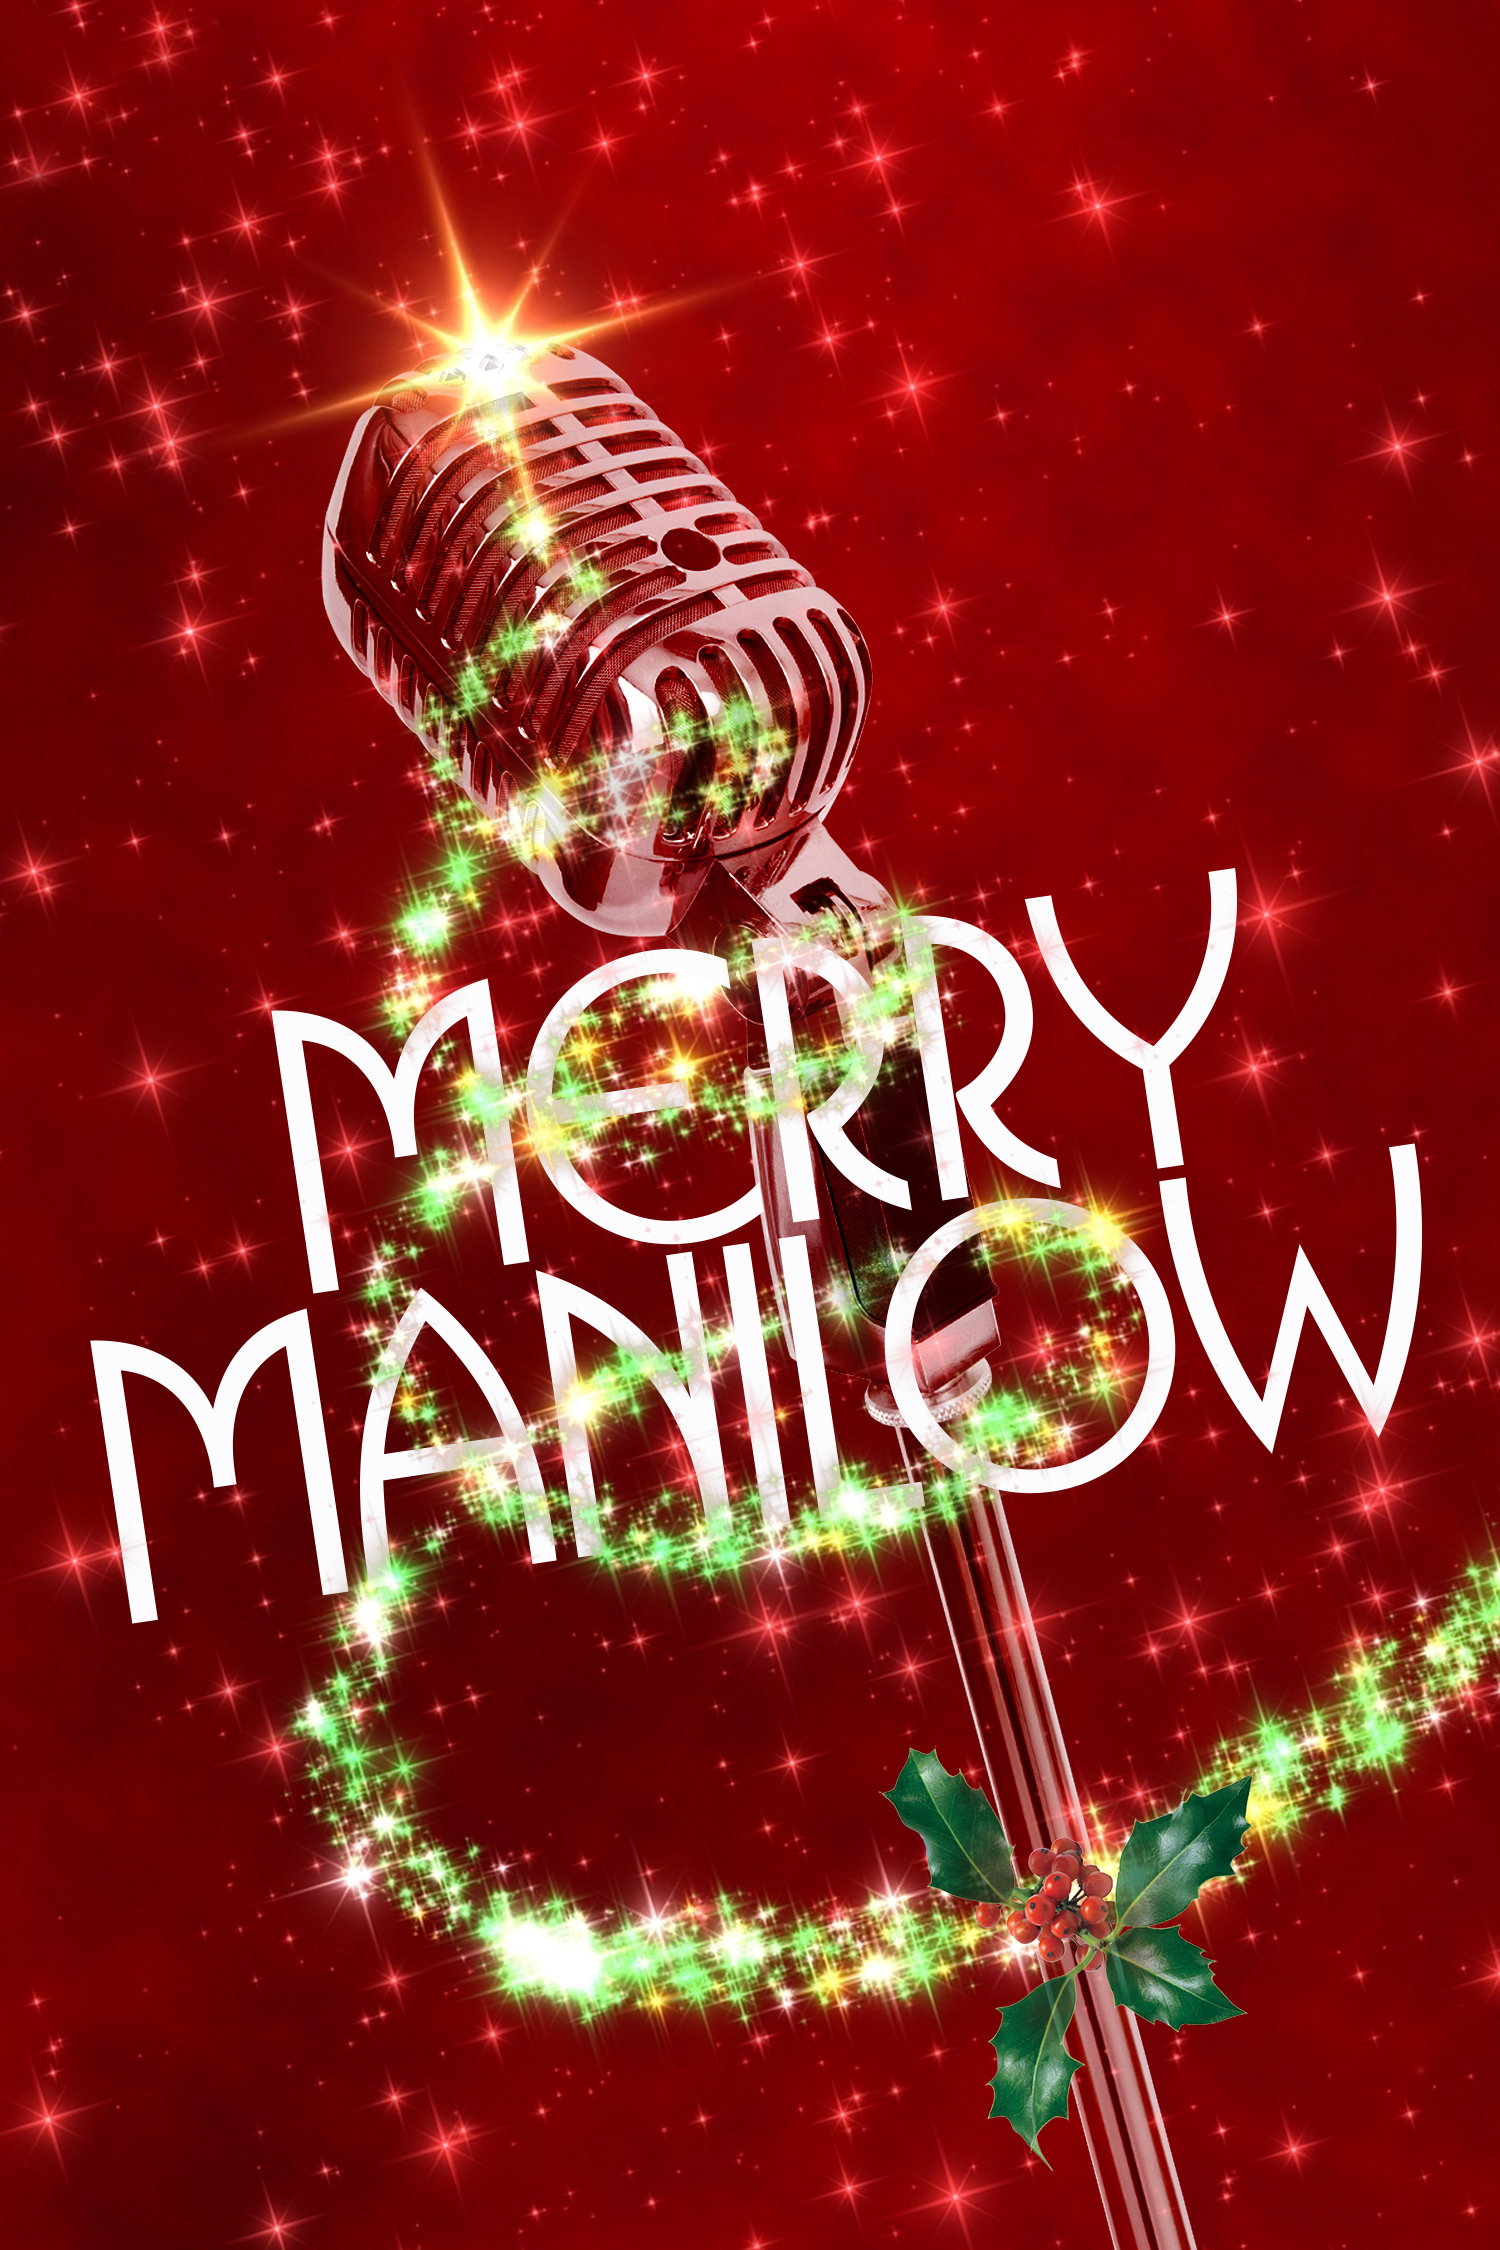 Merry Manilow